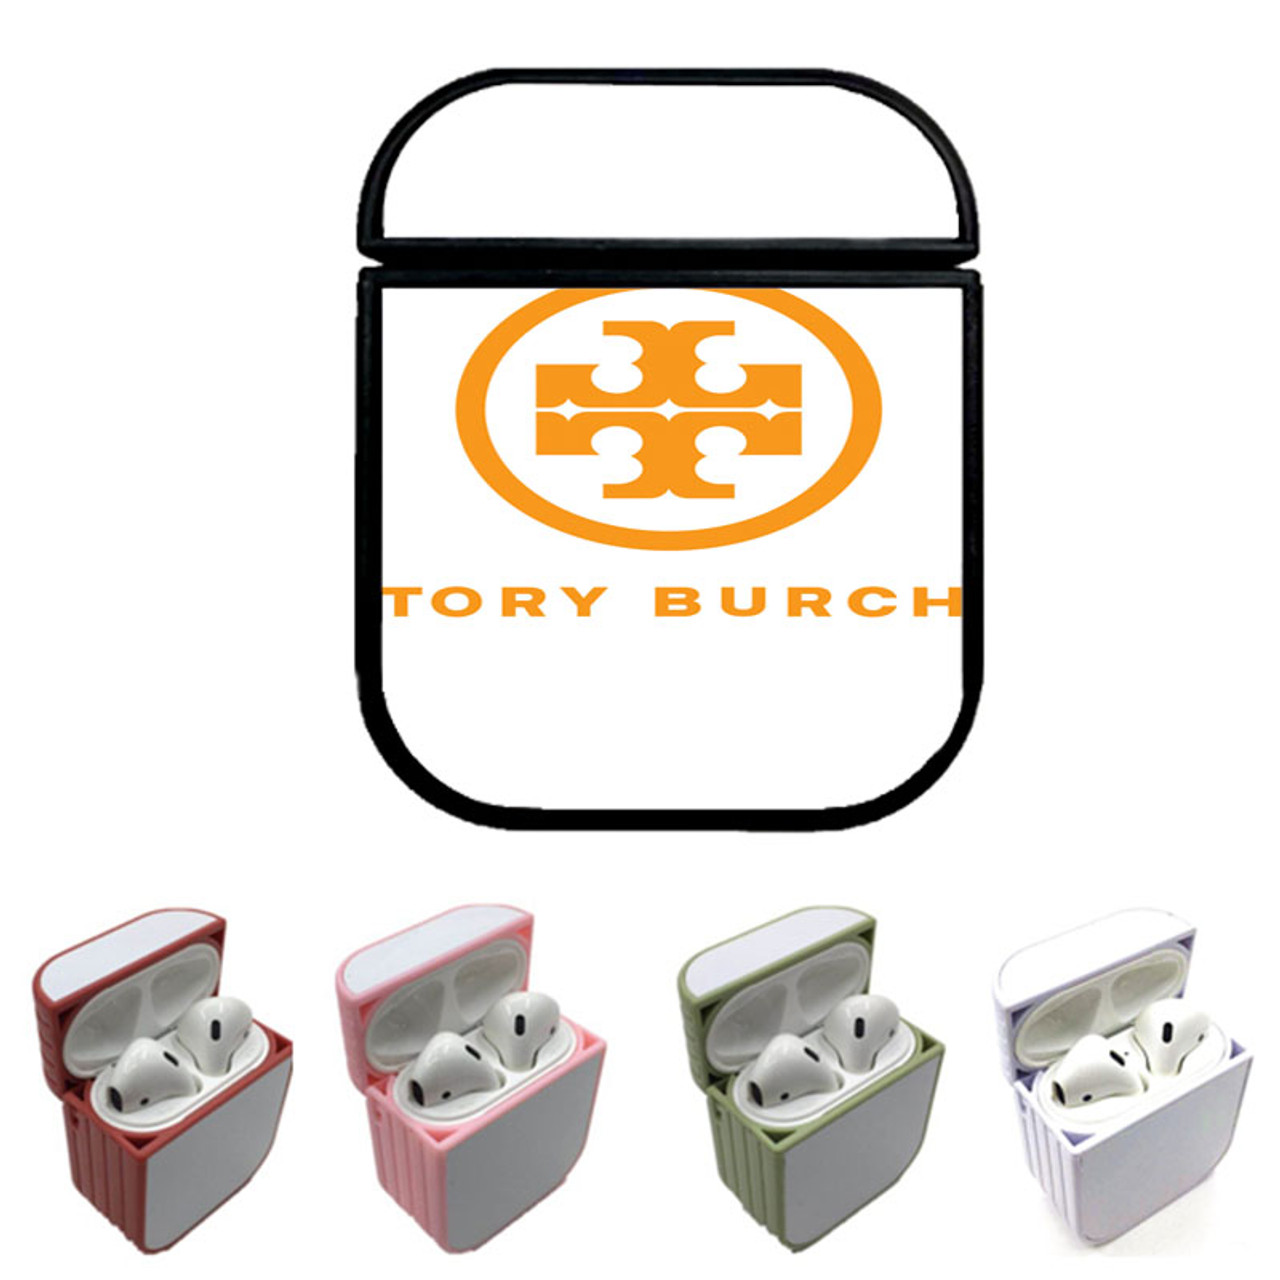 tory burch logo Custom airpods case - Coverszy